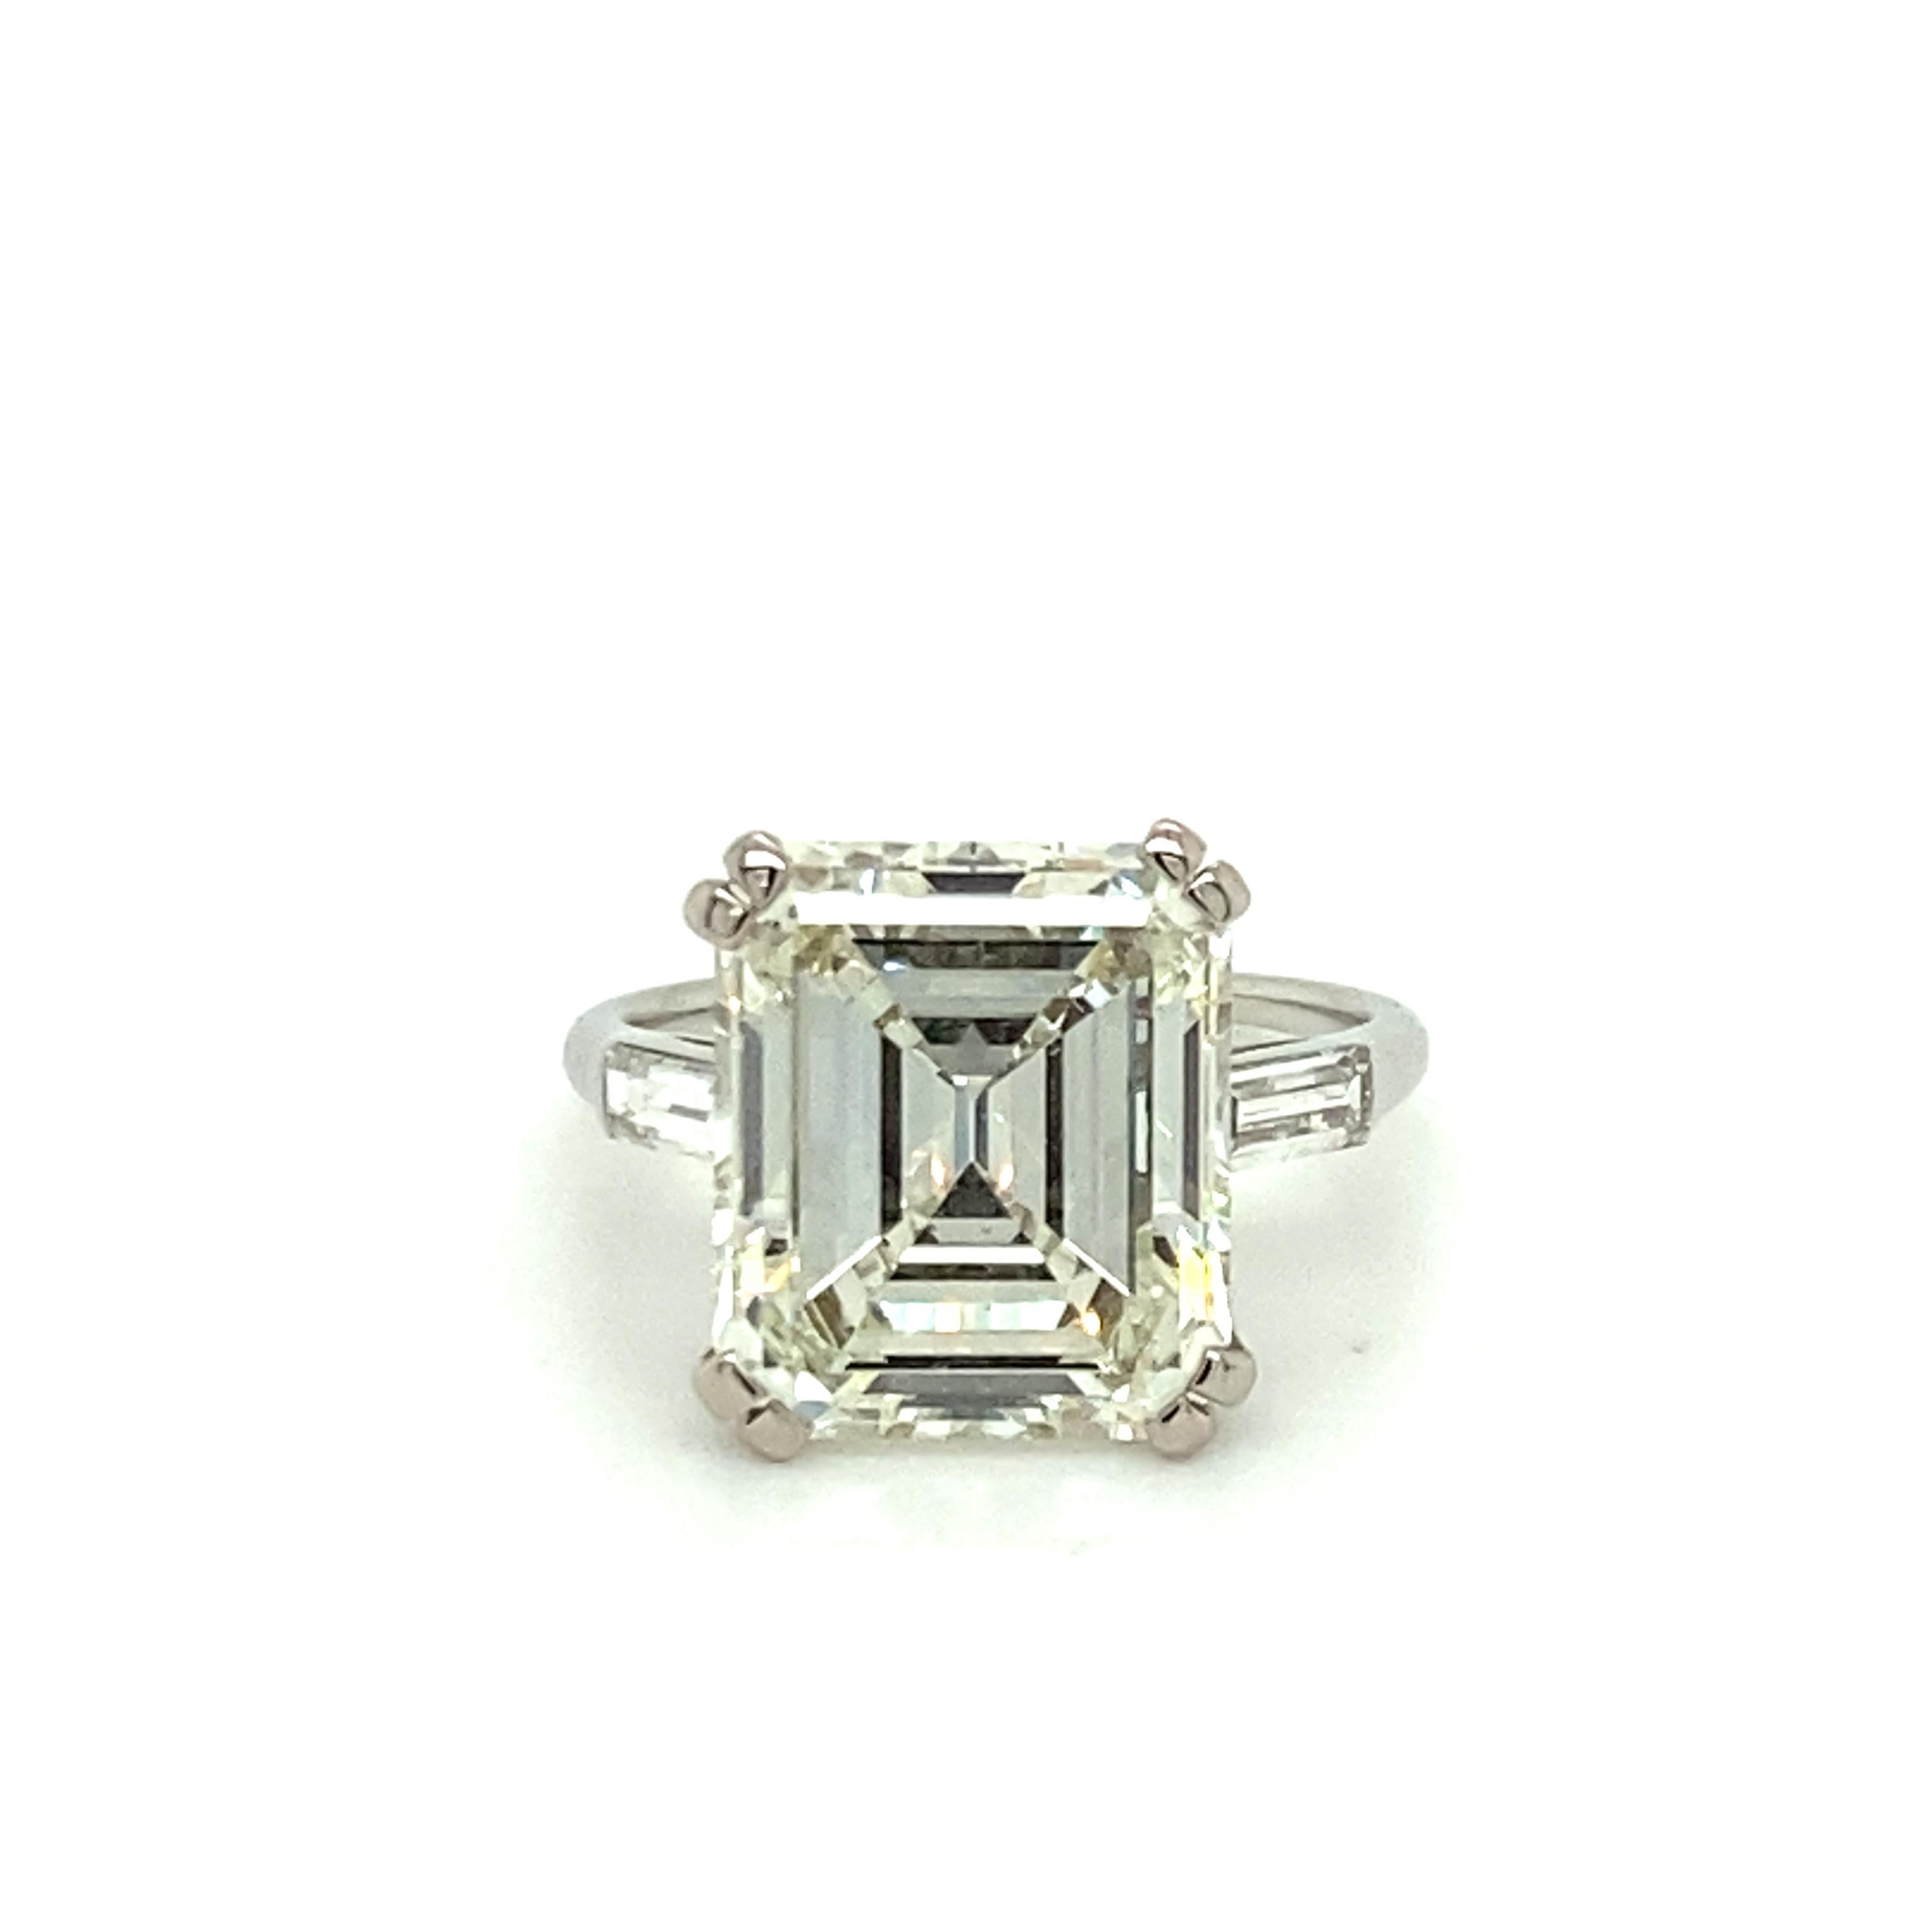 Modern Stunning 7.34 Ct GIA Certified Emerald-Cut Diamond Ring in Platinum 950